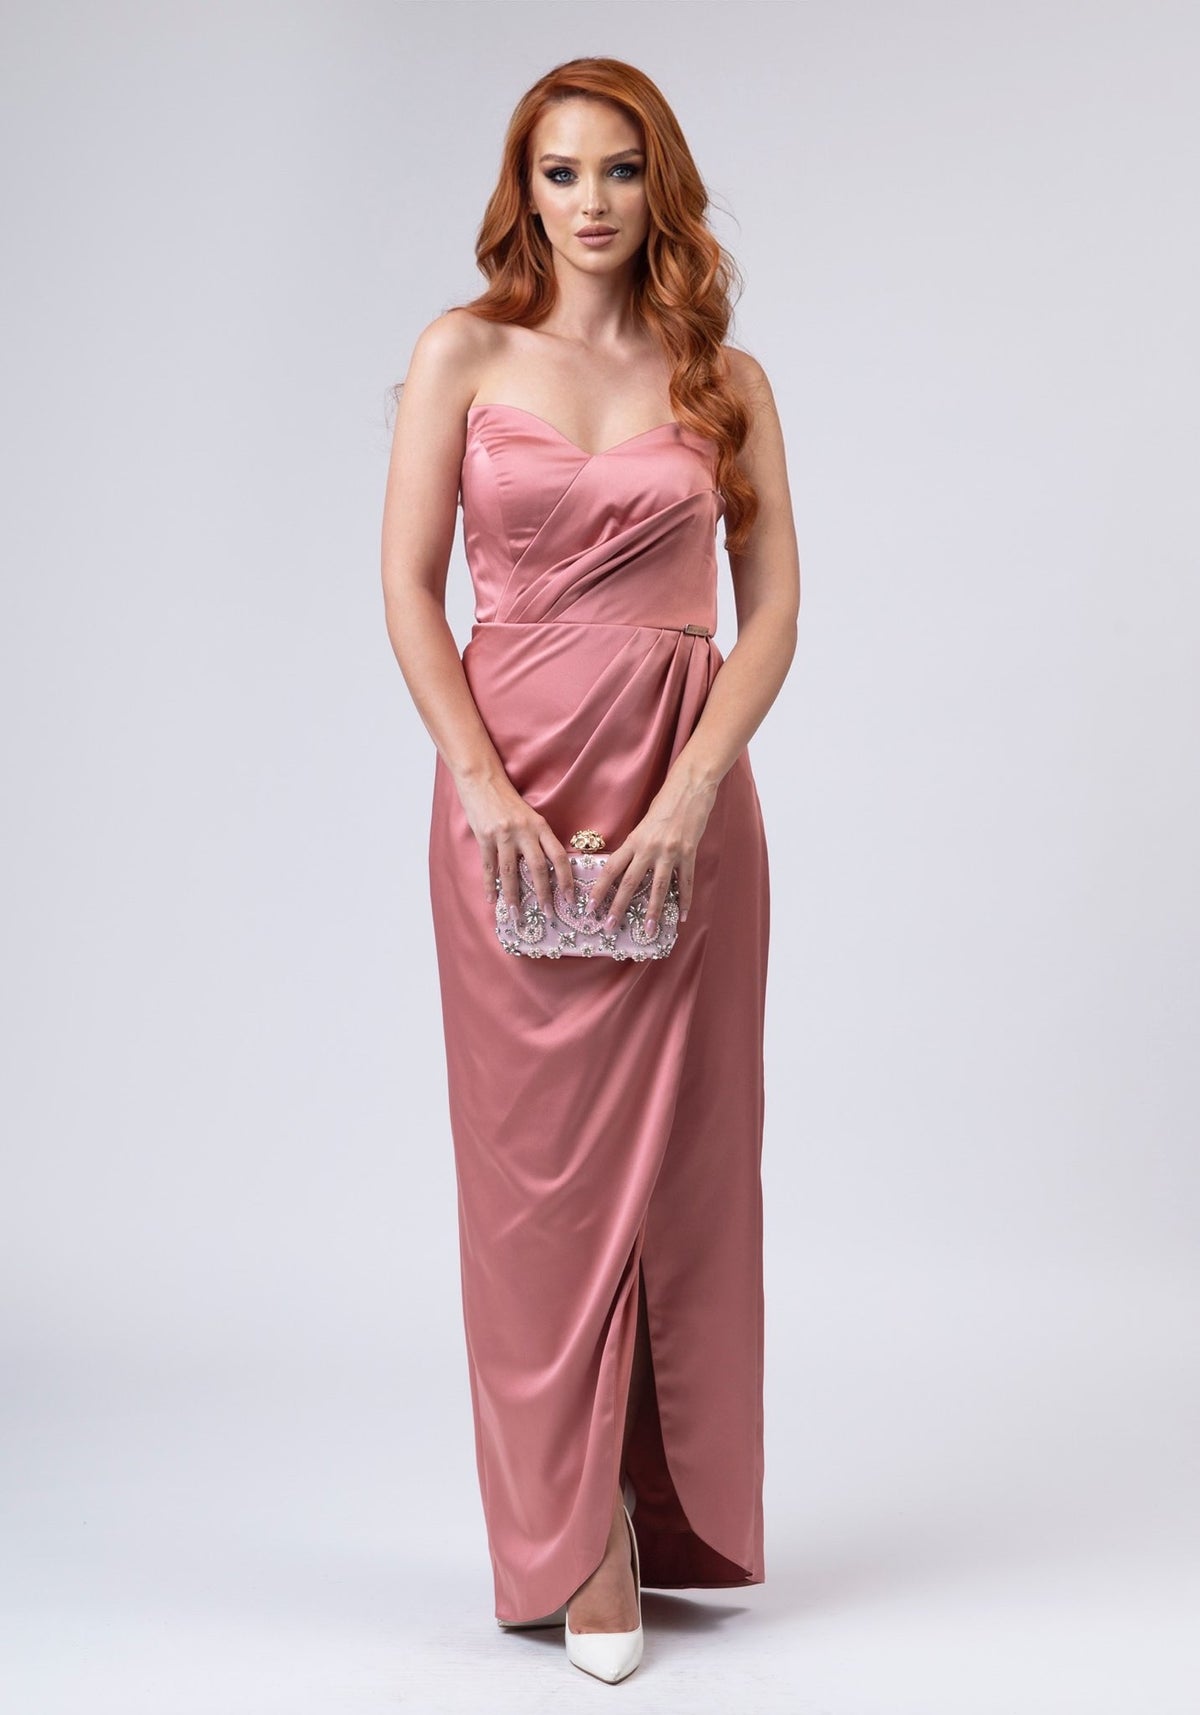 Long corseted pink dress